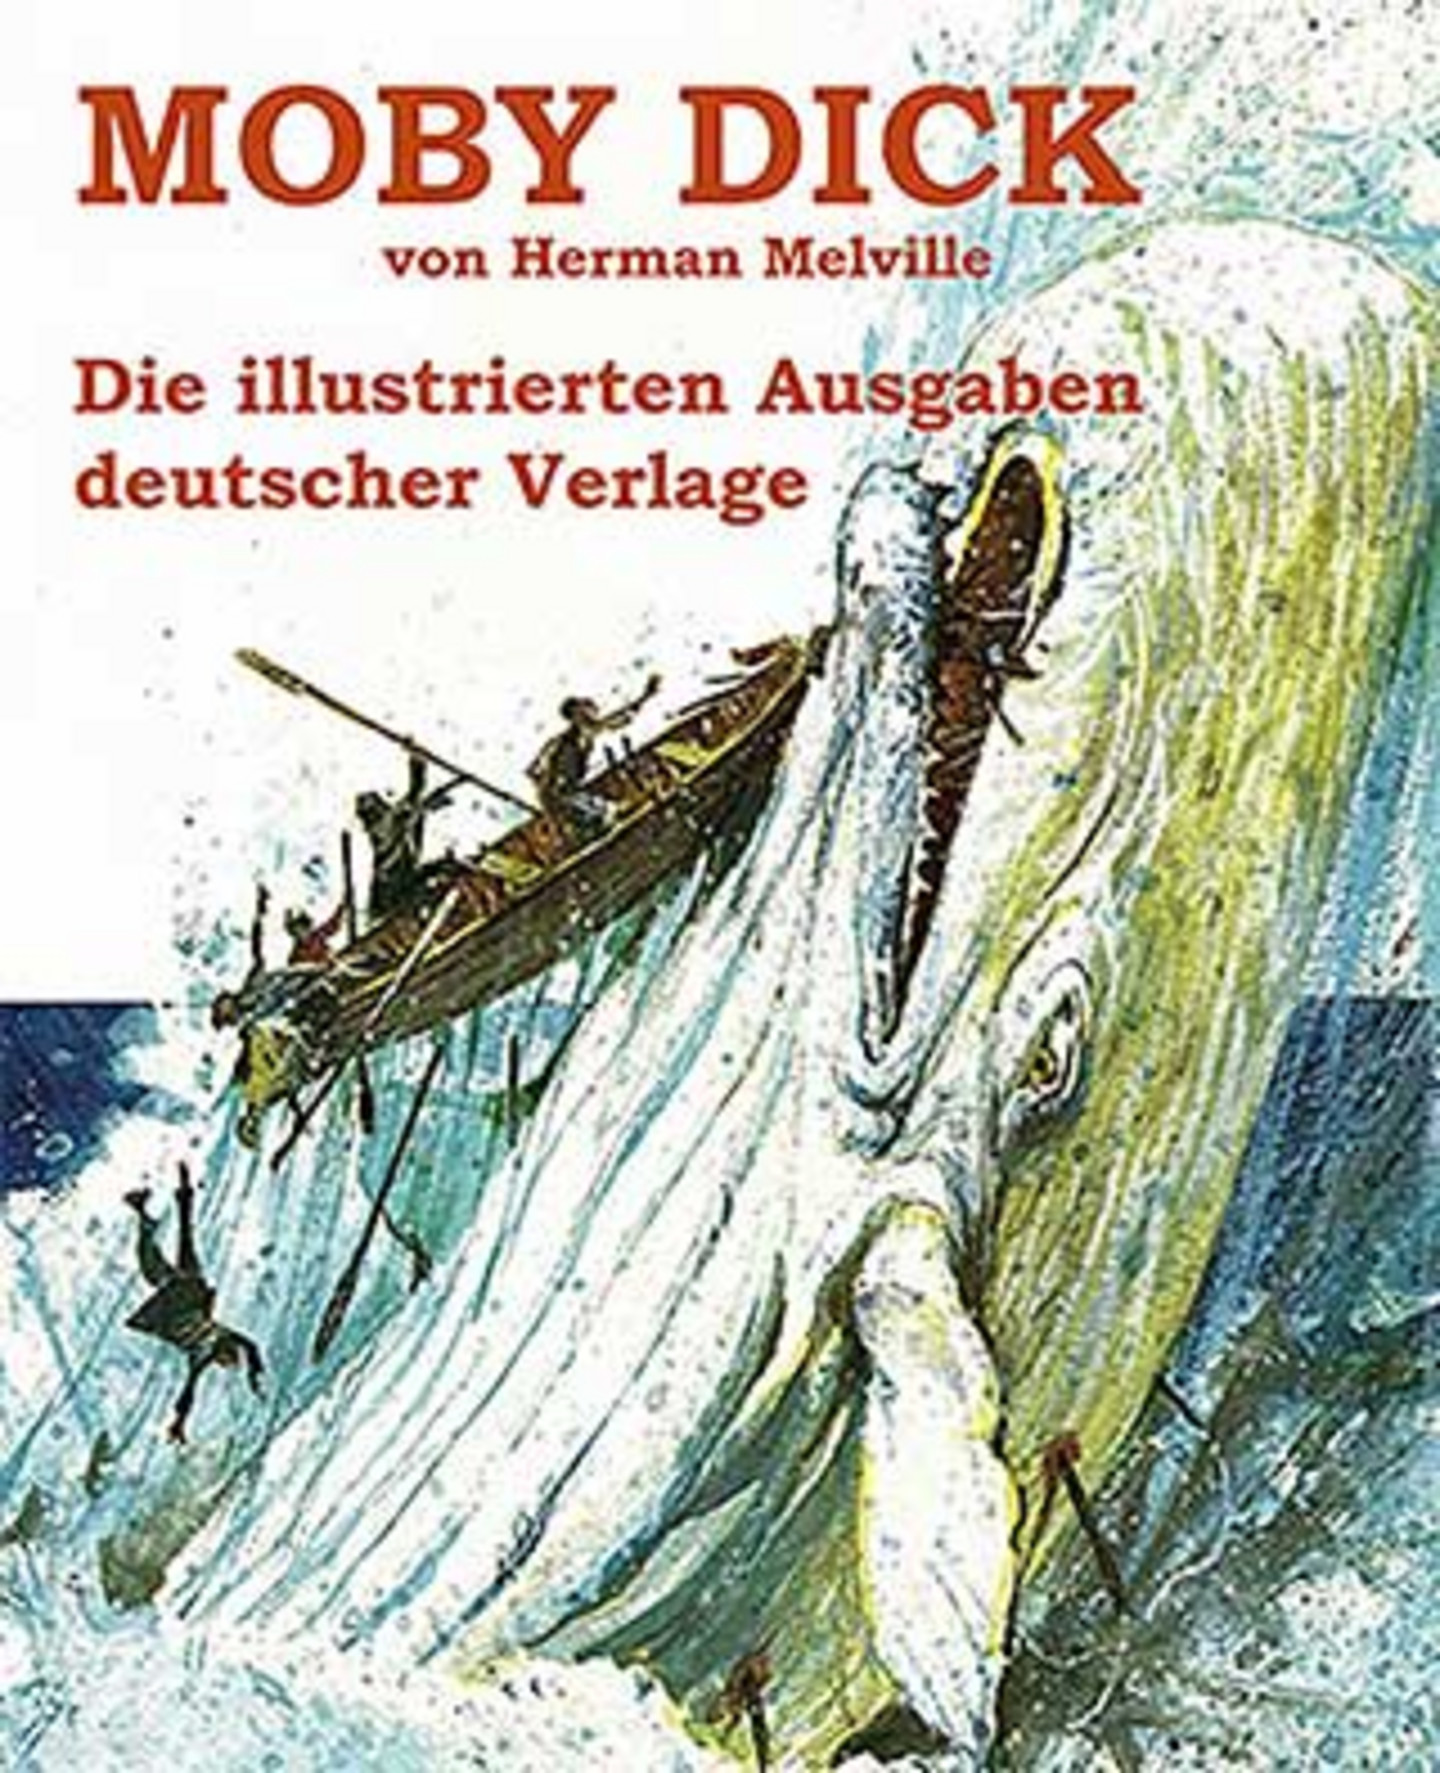 Plakat zur Ausstellung "Moby Dick" in der USB Köln.